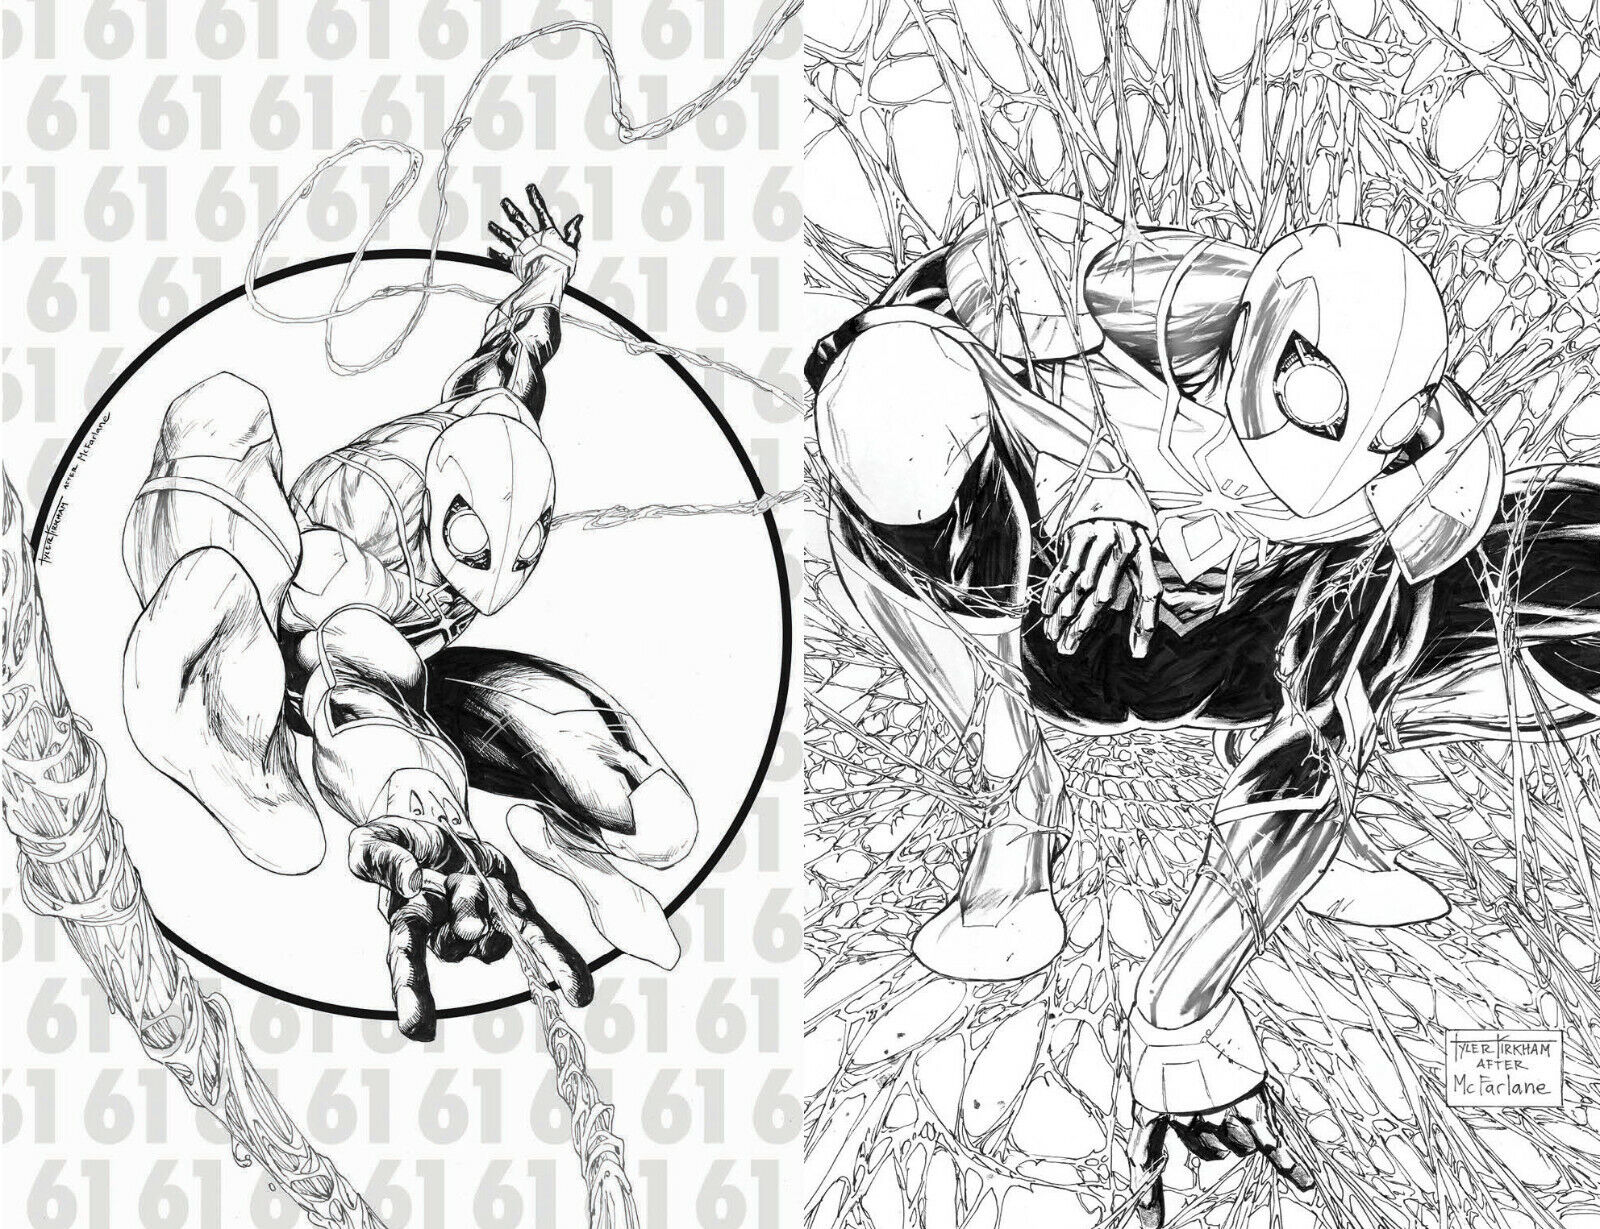 Amazing Spider-Man #61 #62 Tyler Kirkham Sketch BW 1 300 Homage Variant Set of 2